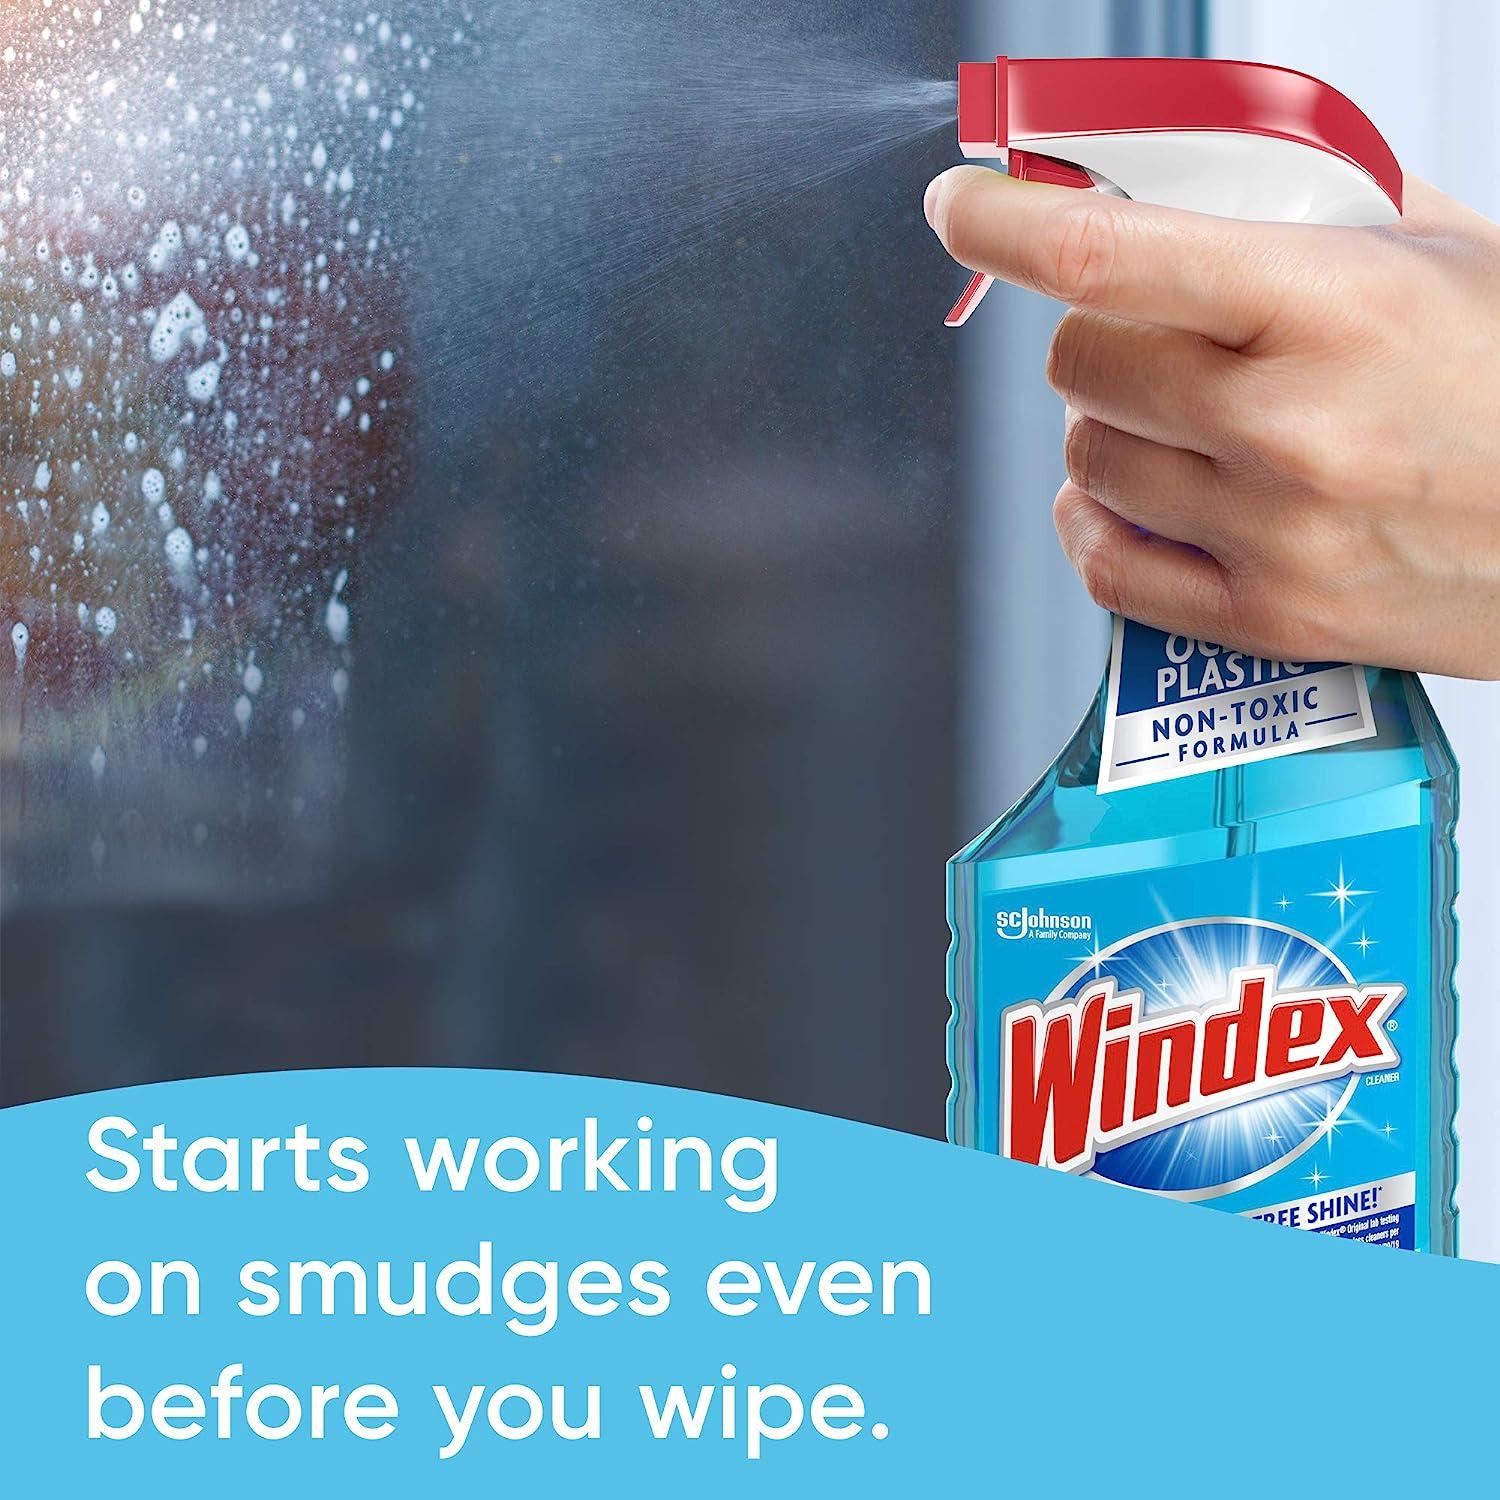  Windex Glass Cleaner Refill, Vinegar, 2 Liter Bundle